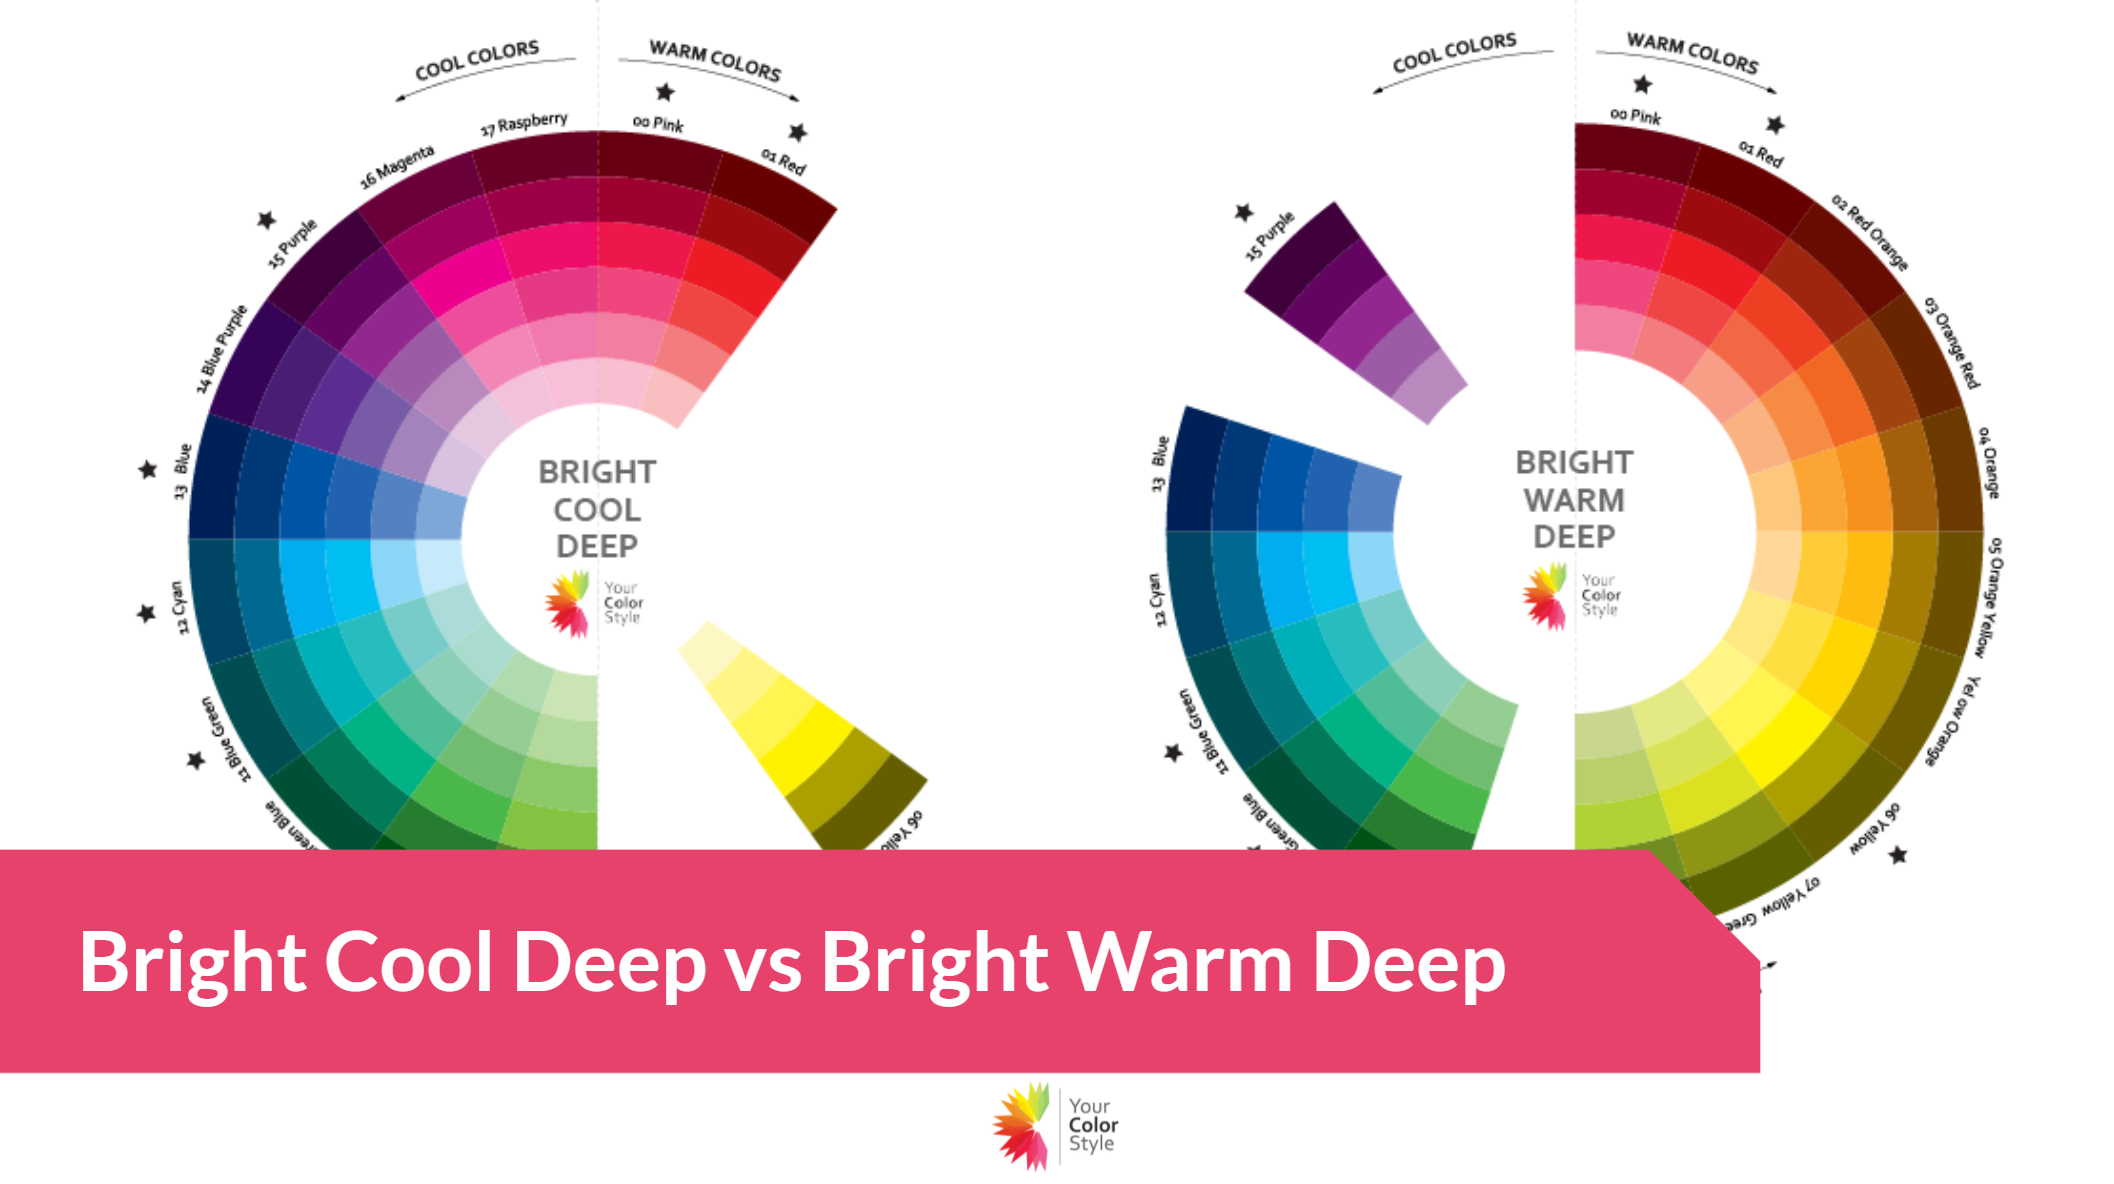 Bright Cool Deep vs Bright Warm Deep